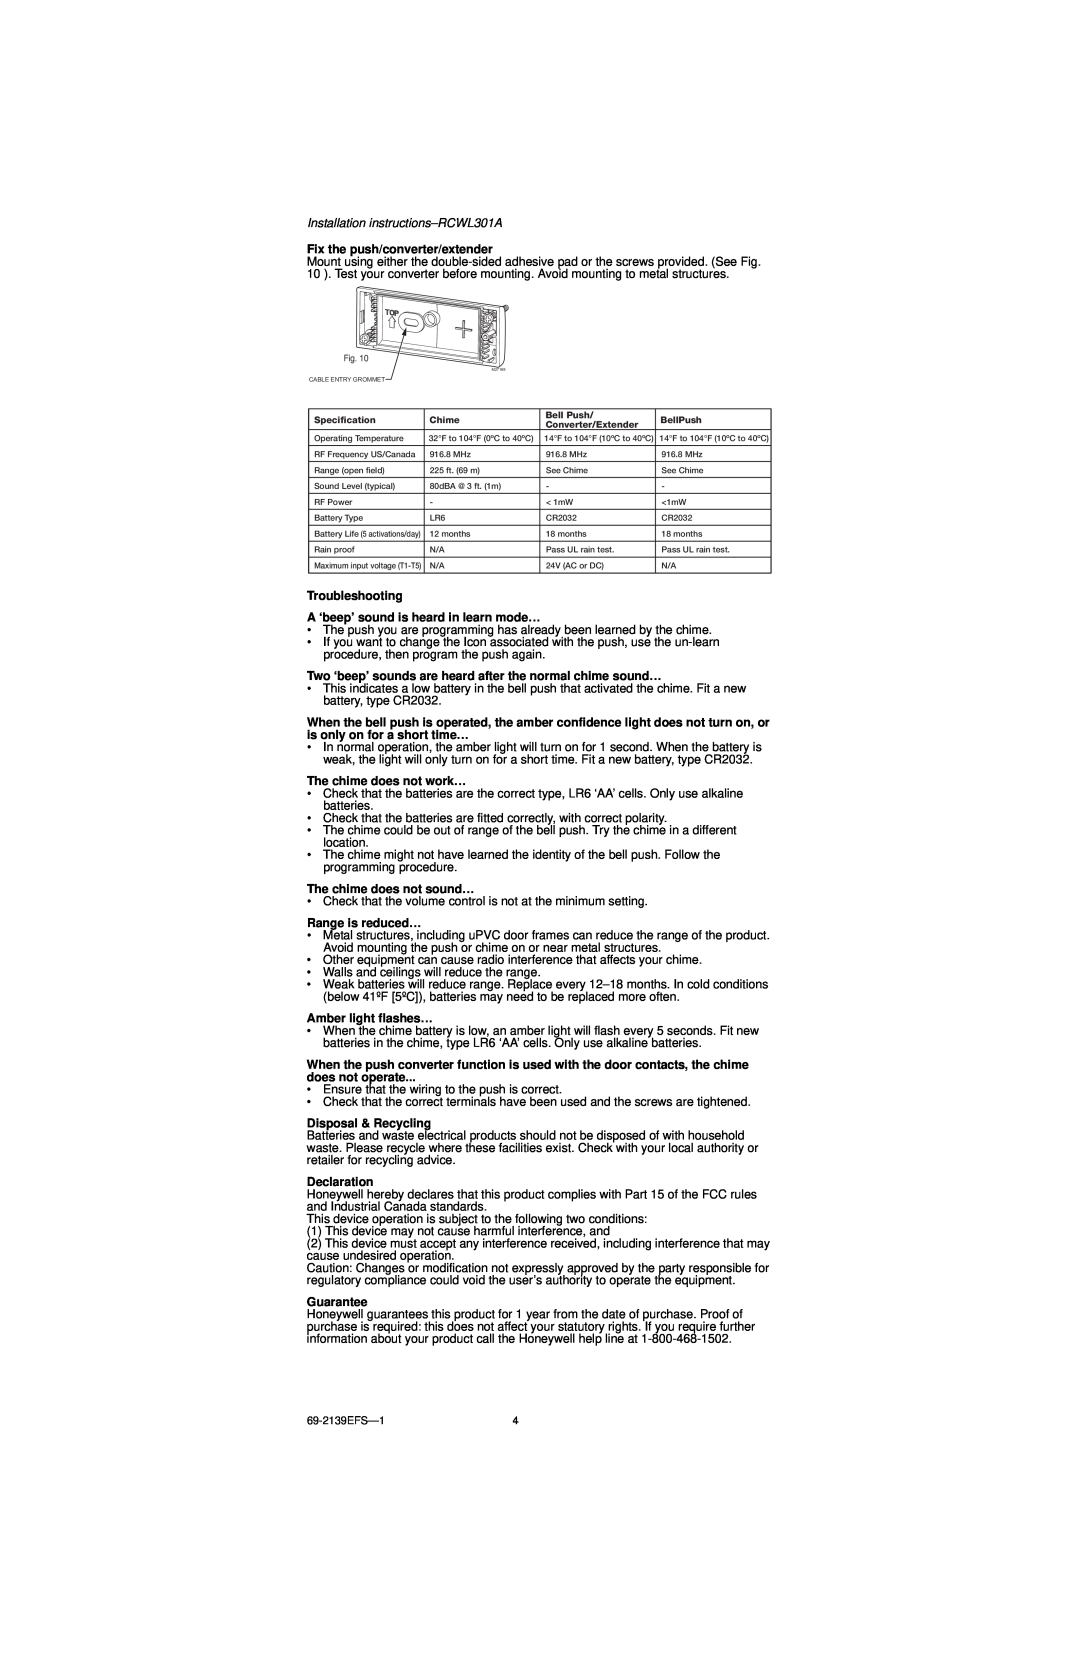 Honeywell instruction manual Installation instructions-RCWL301A, Fix the push/converter/extender 